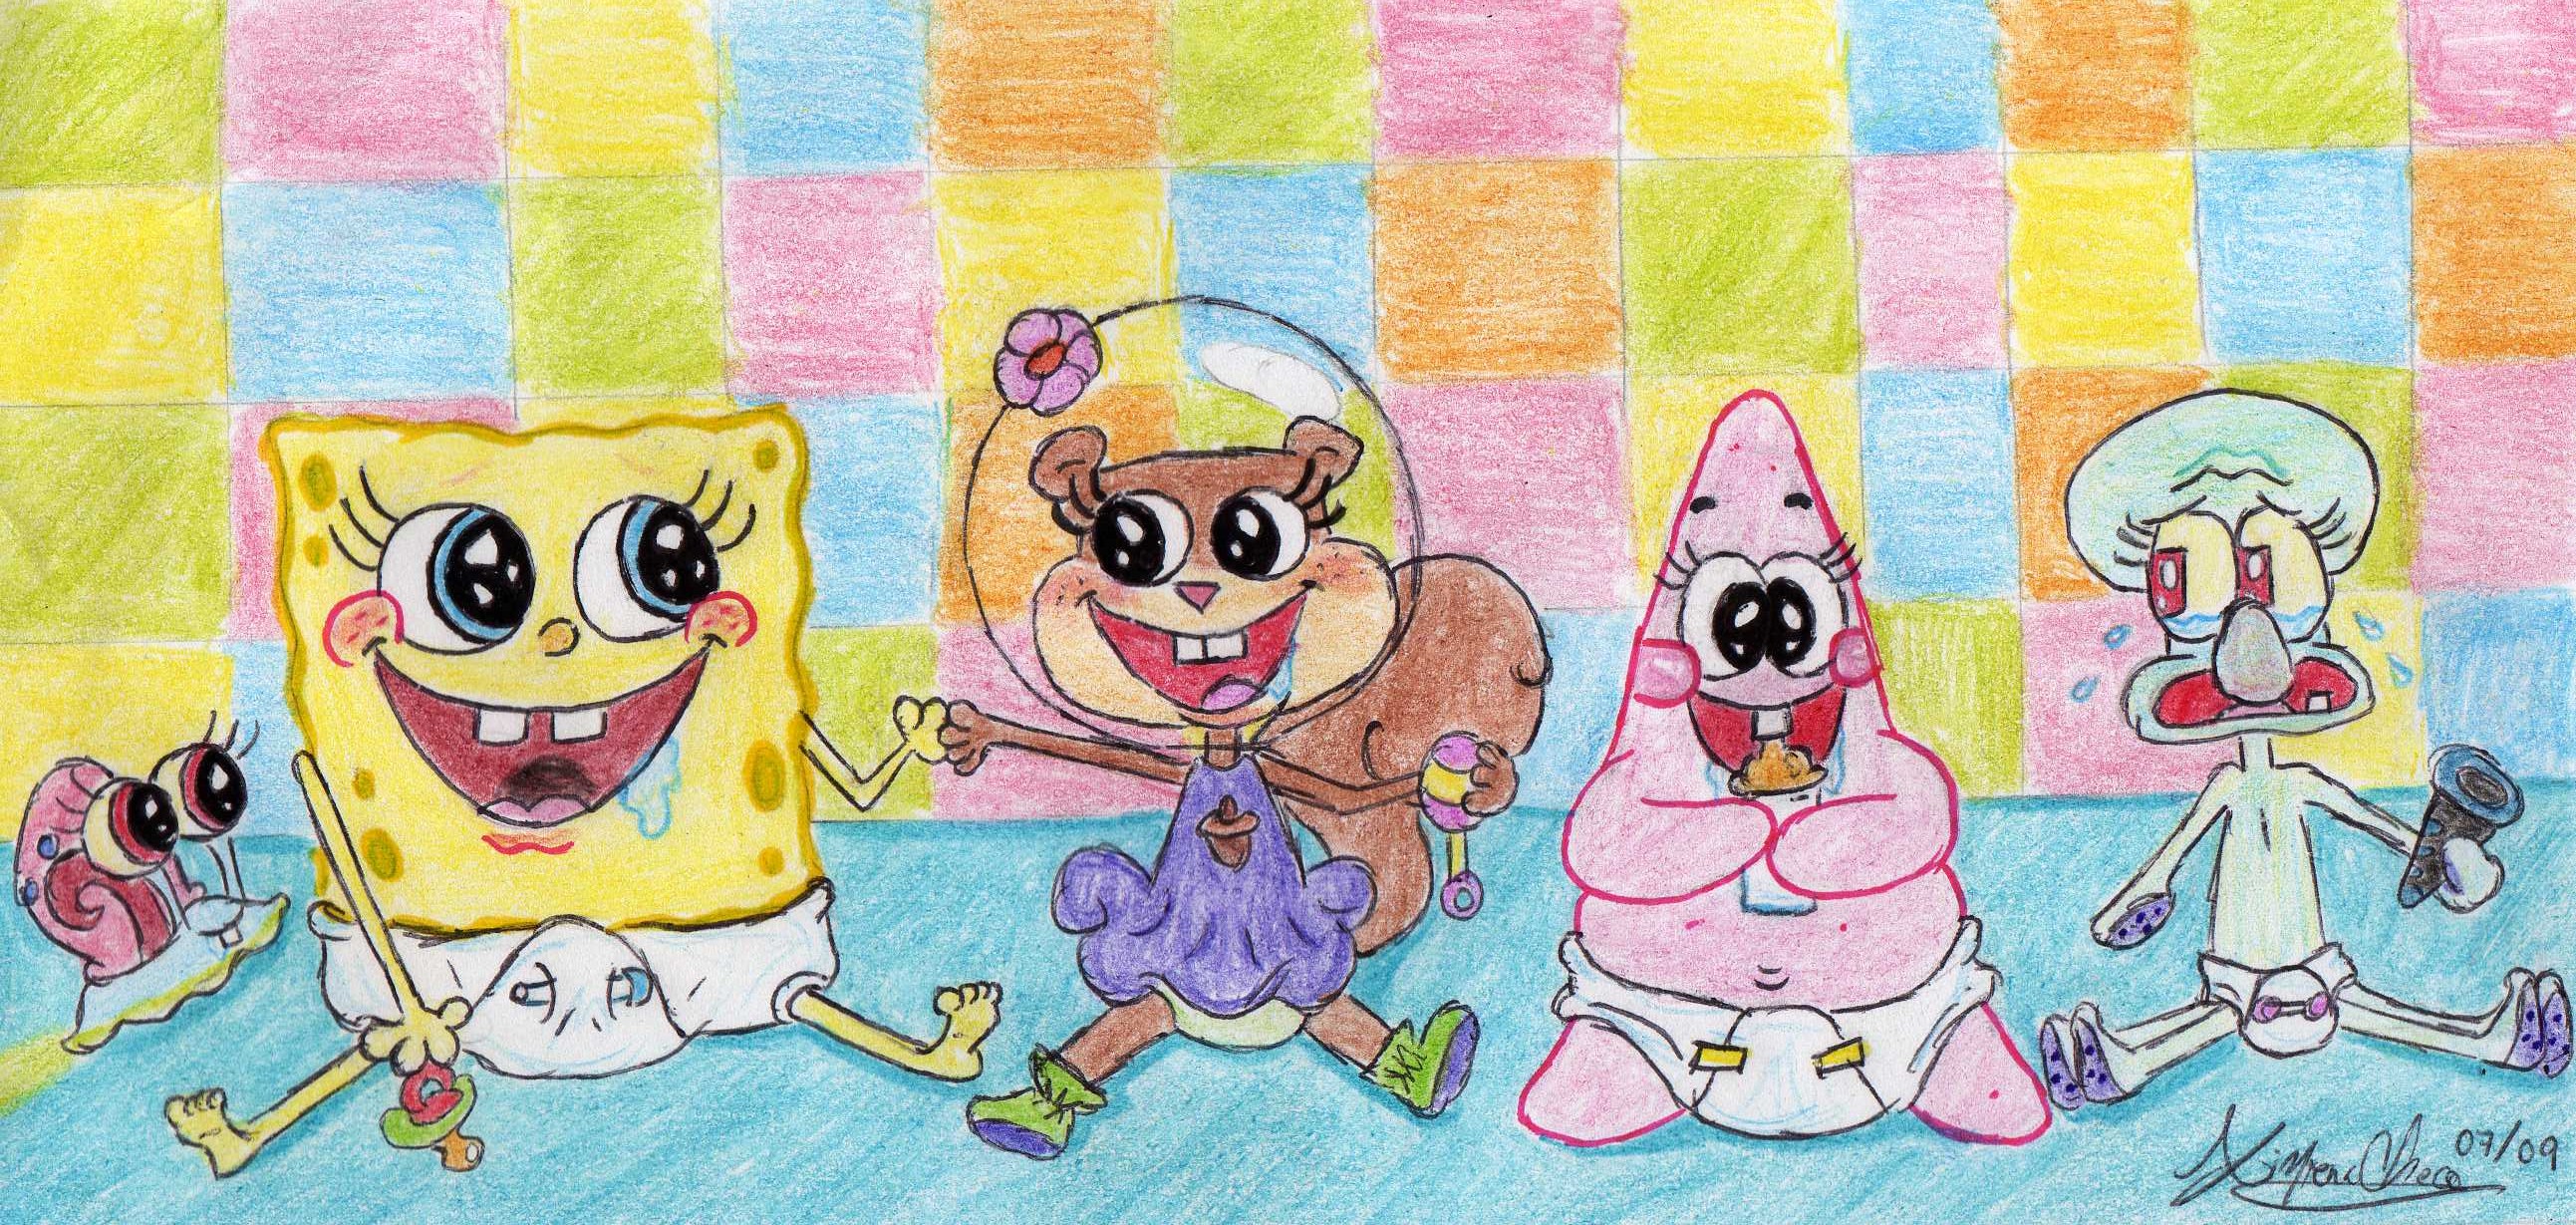 spongebob characters as babies